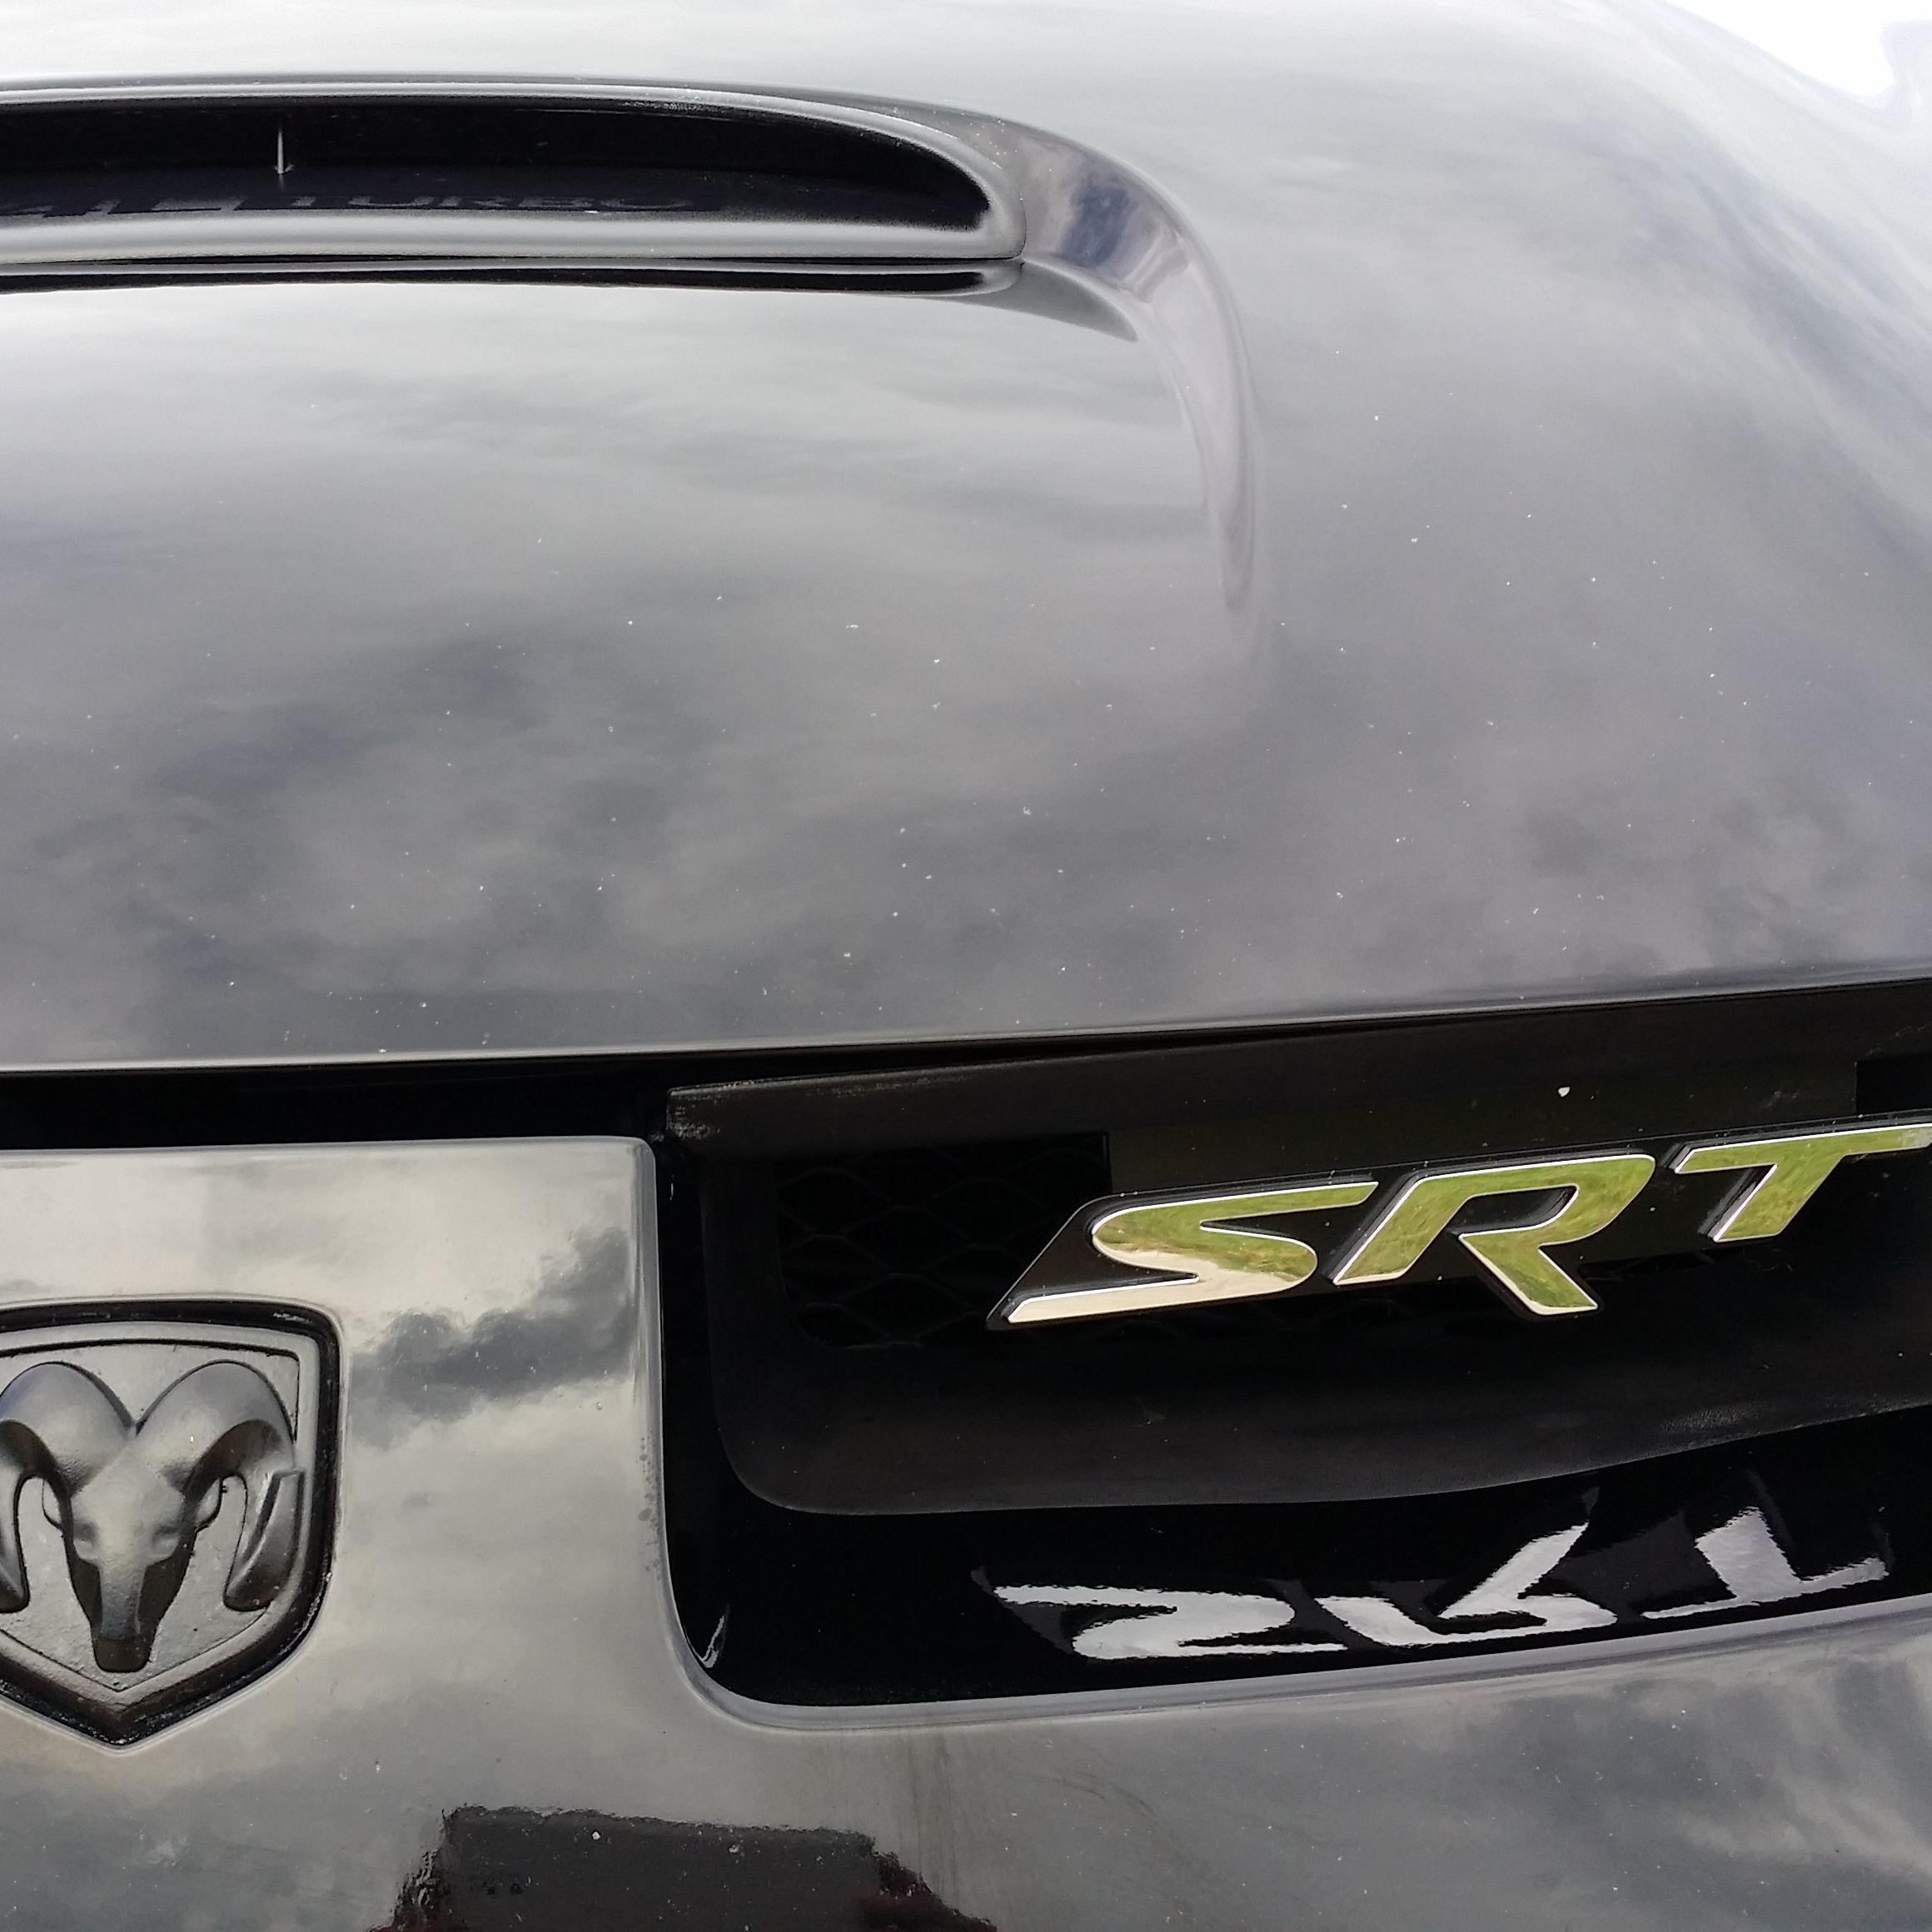 SRT/Dodge enthusiast